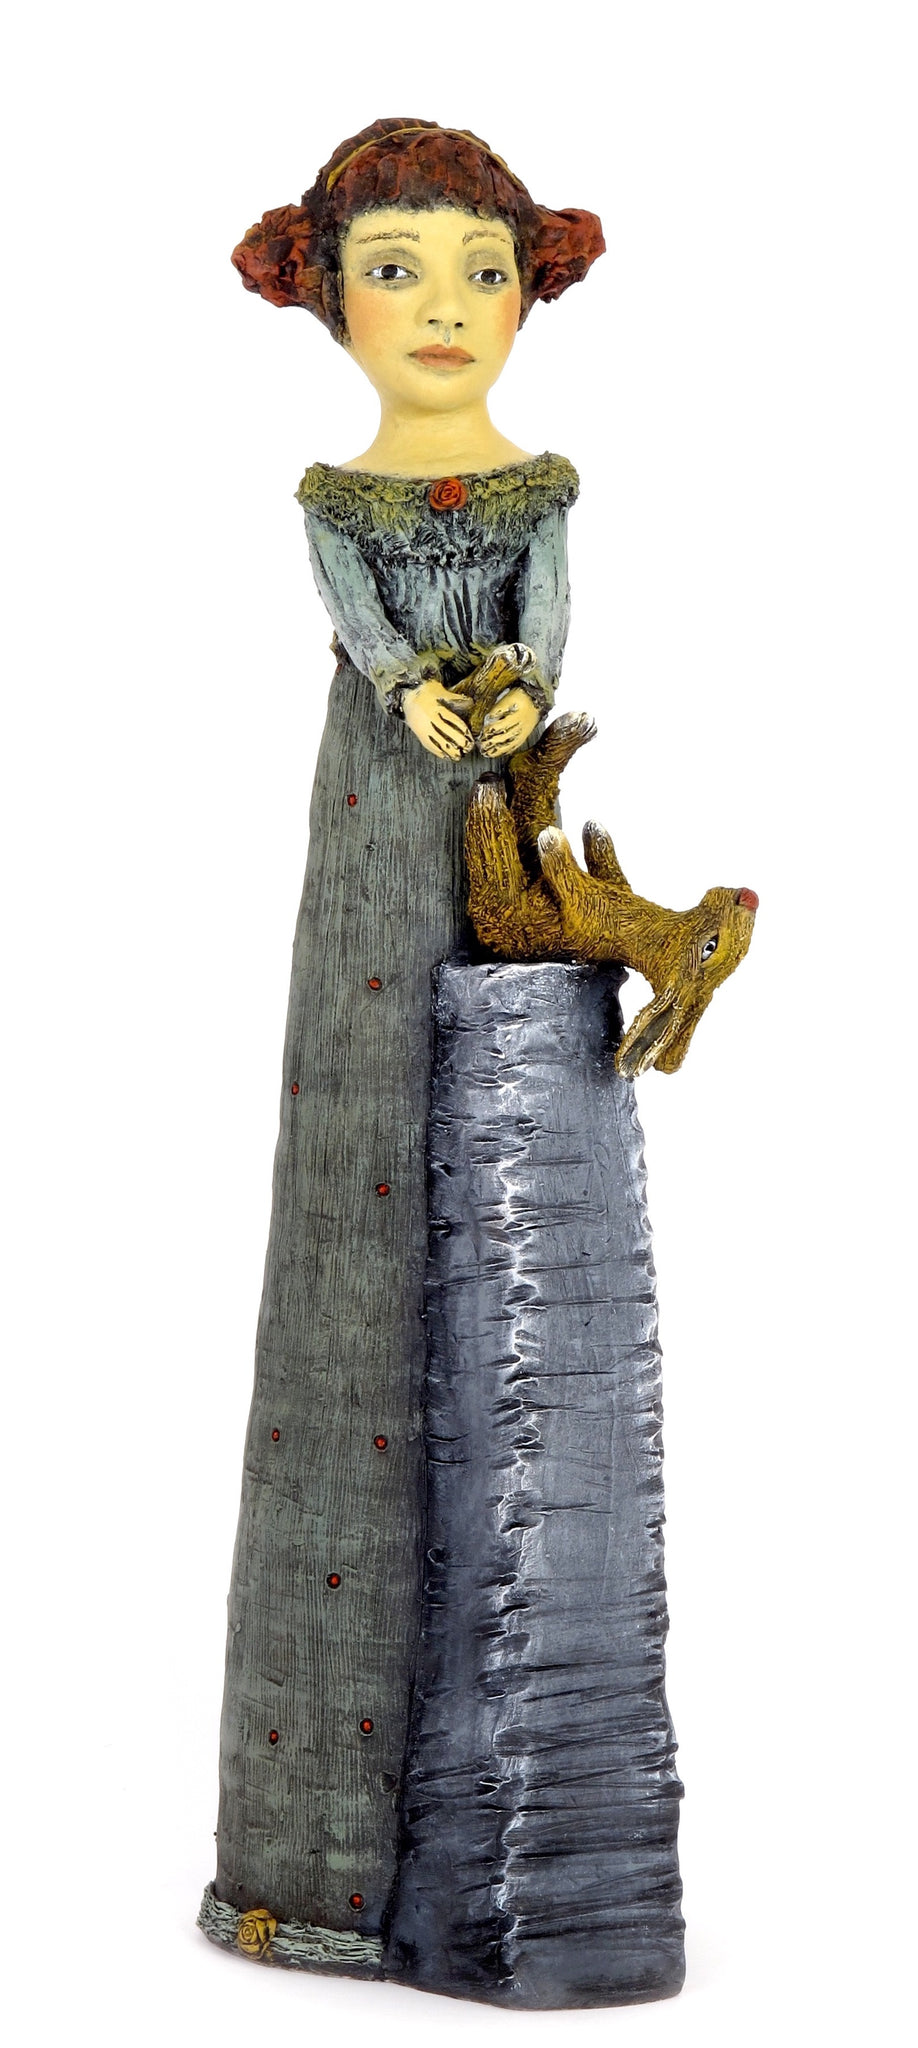 SOLD   "Returning Lucky's foot" original ceramic sculpture by Jacquline Hurlbert